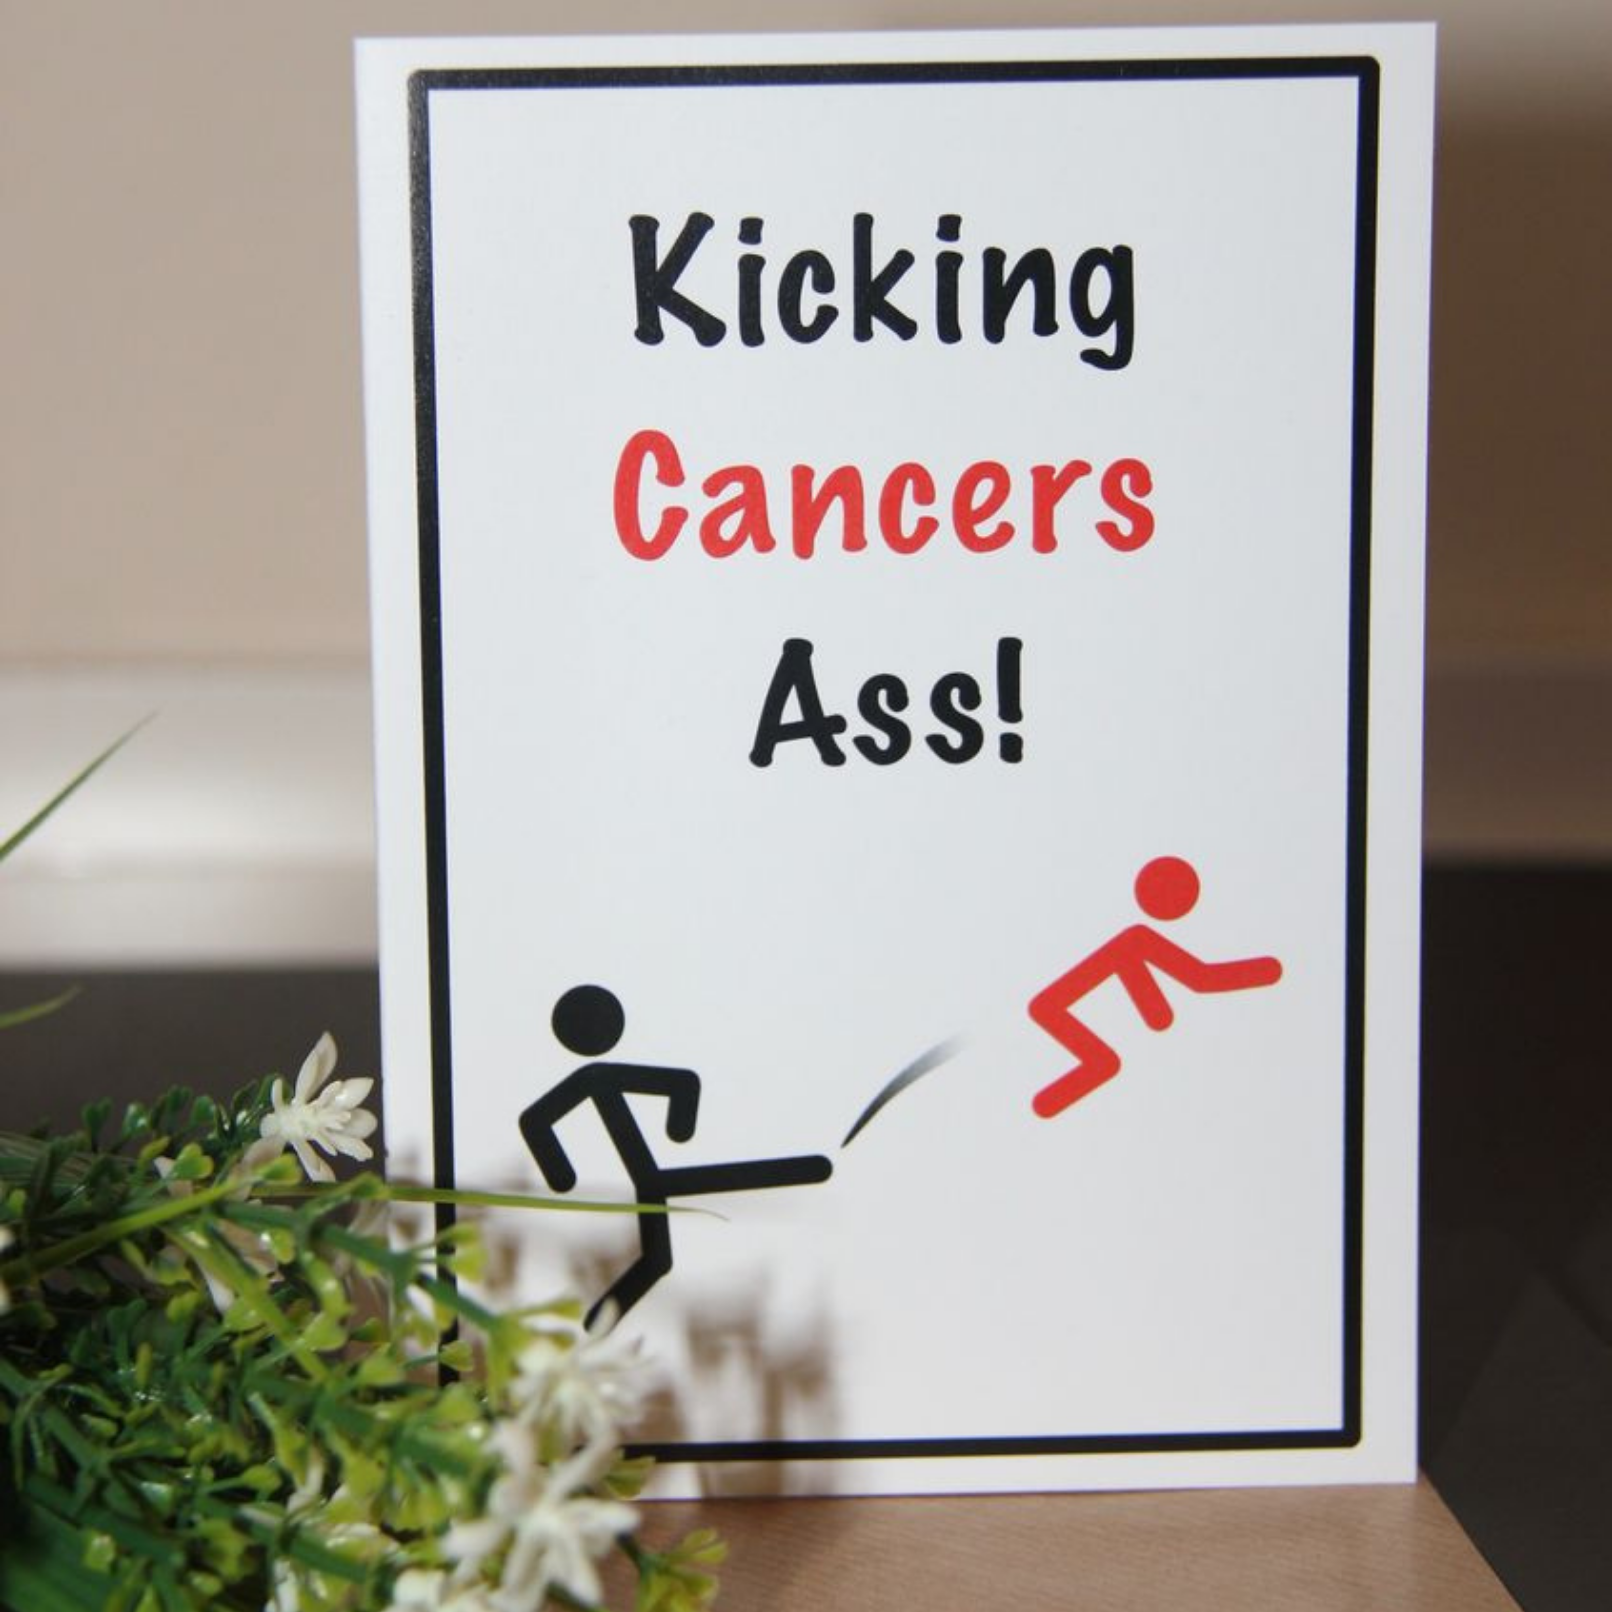 Kicking Cancers A** - Card